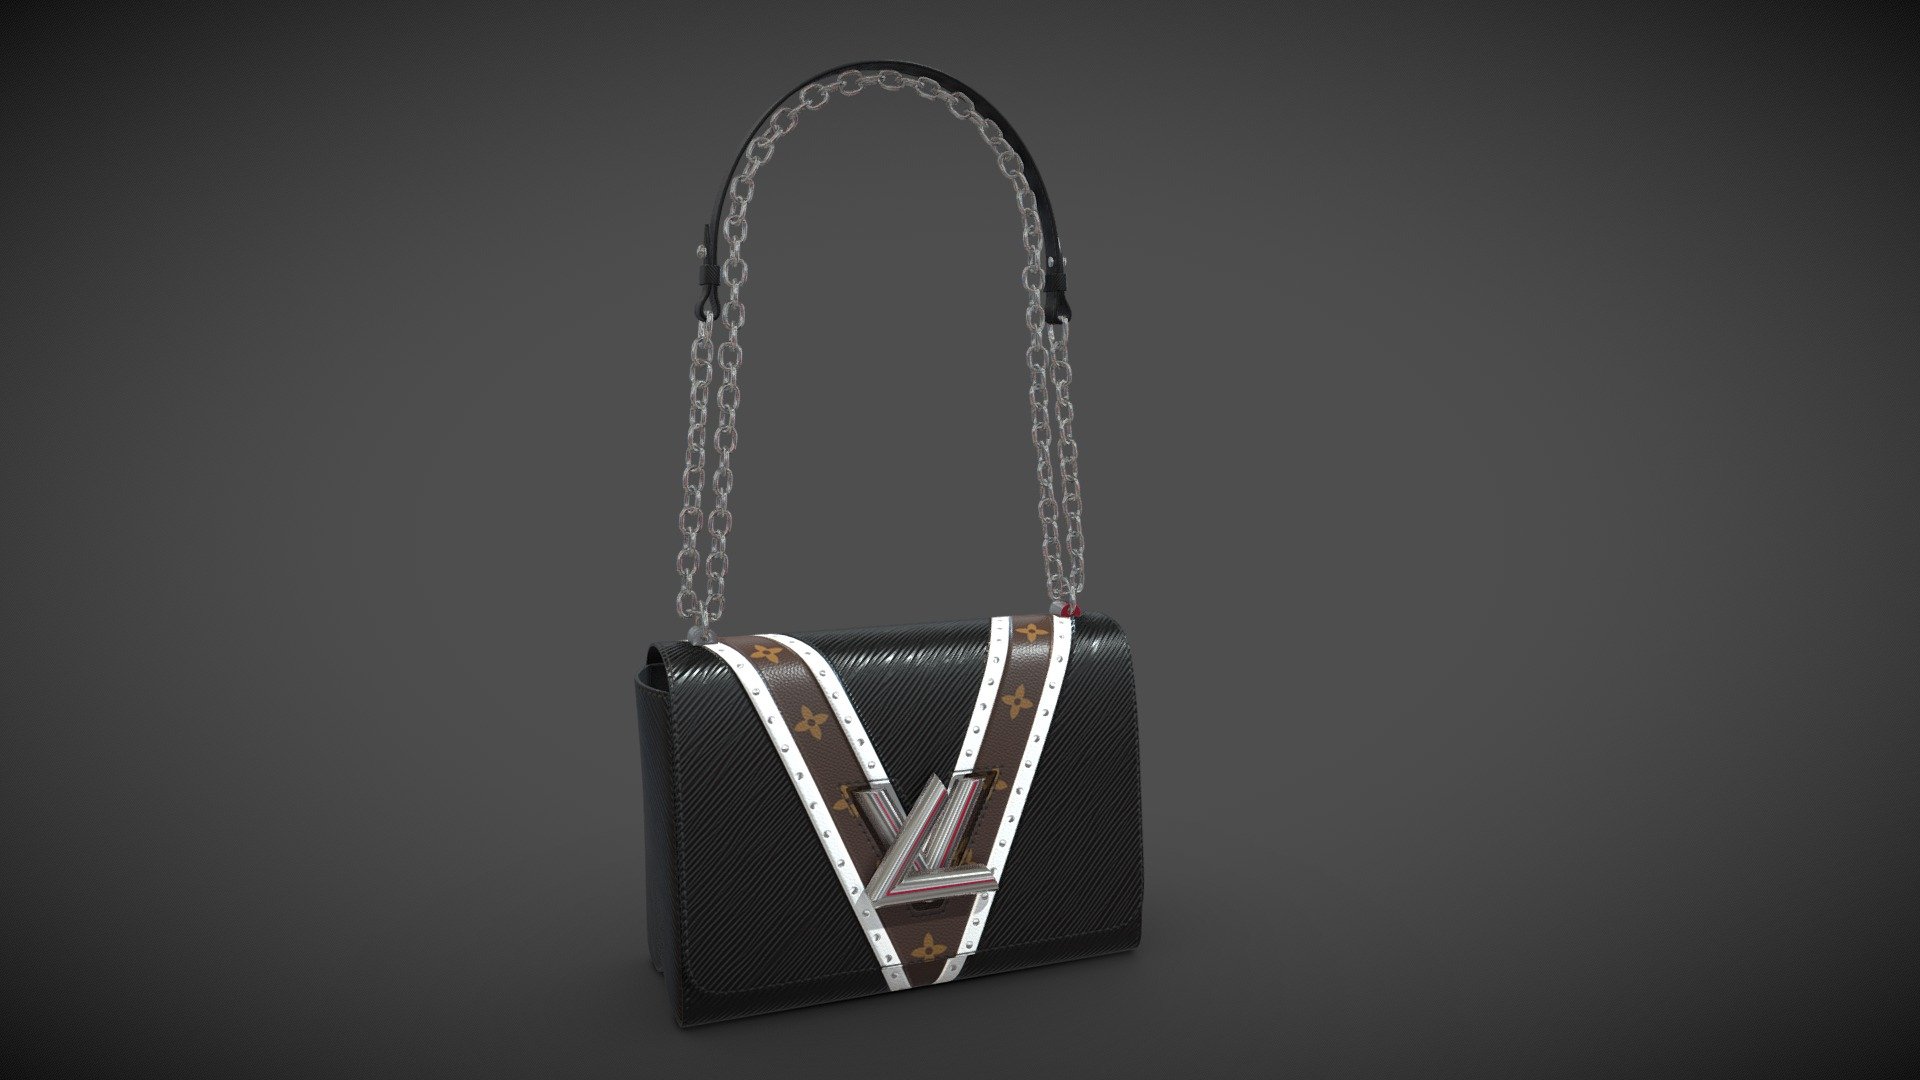 3D model Louis Vuitton Alma BB Top Handle Bag in Epi Leather